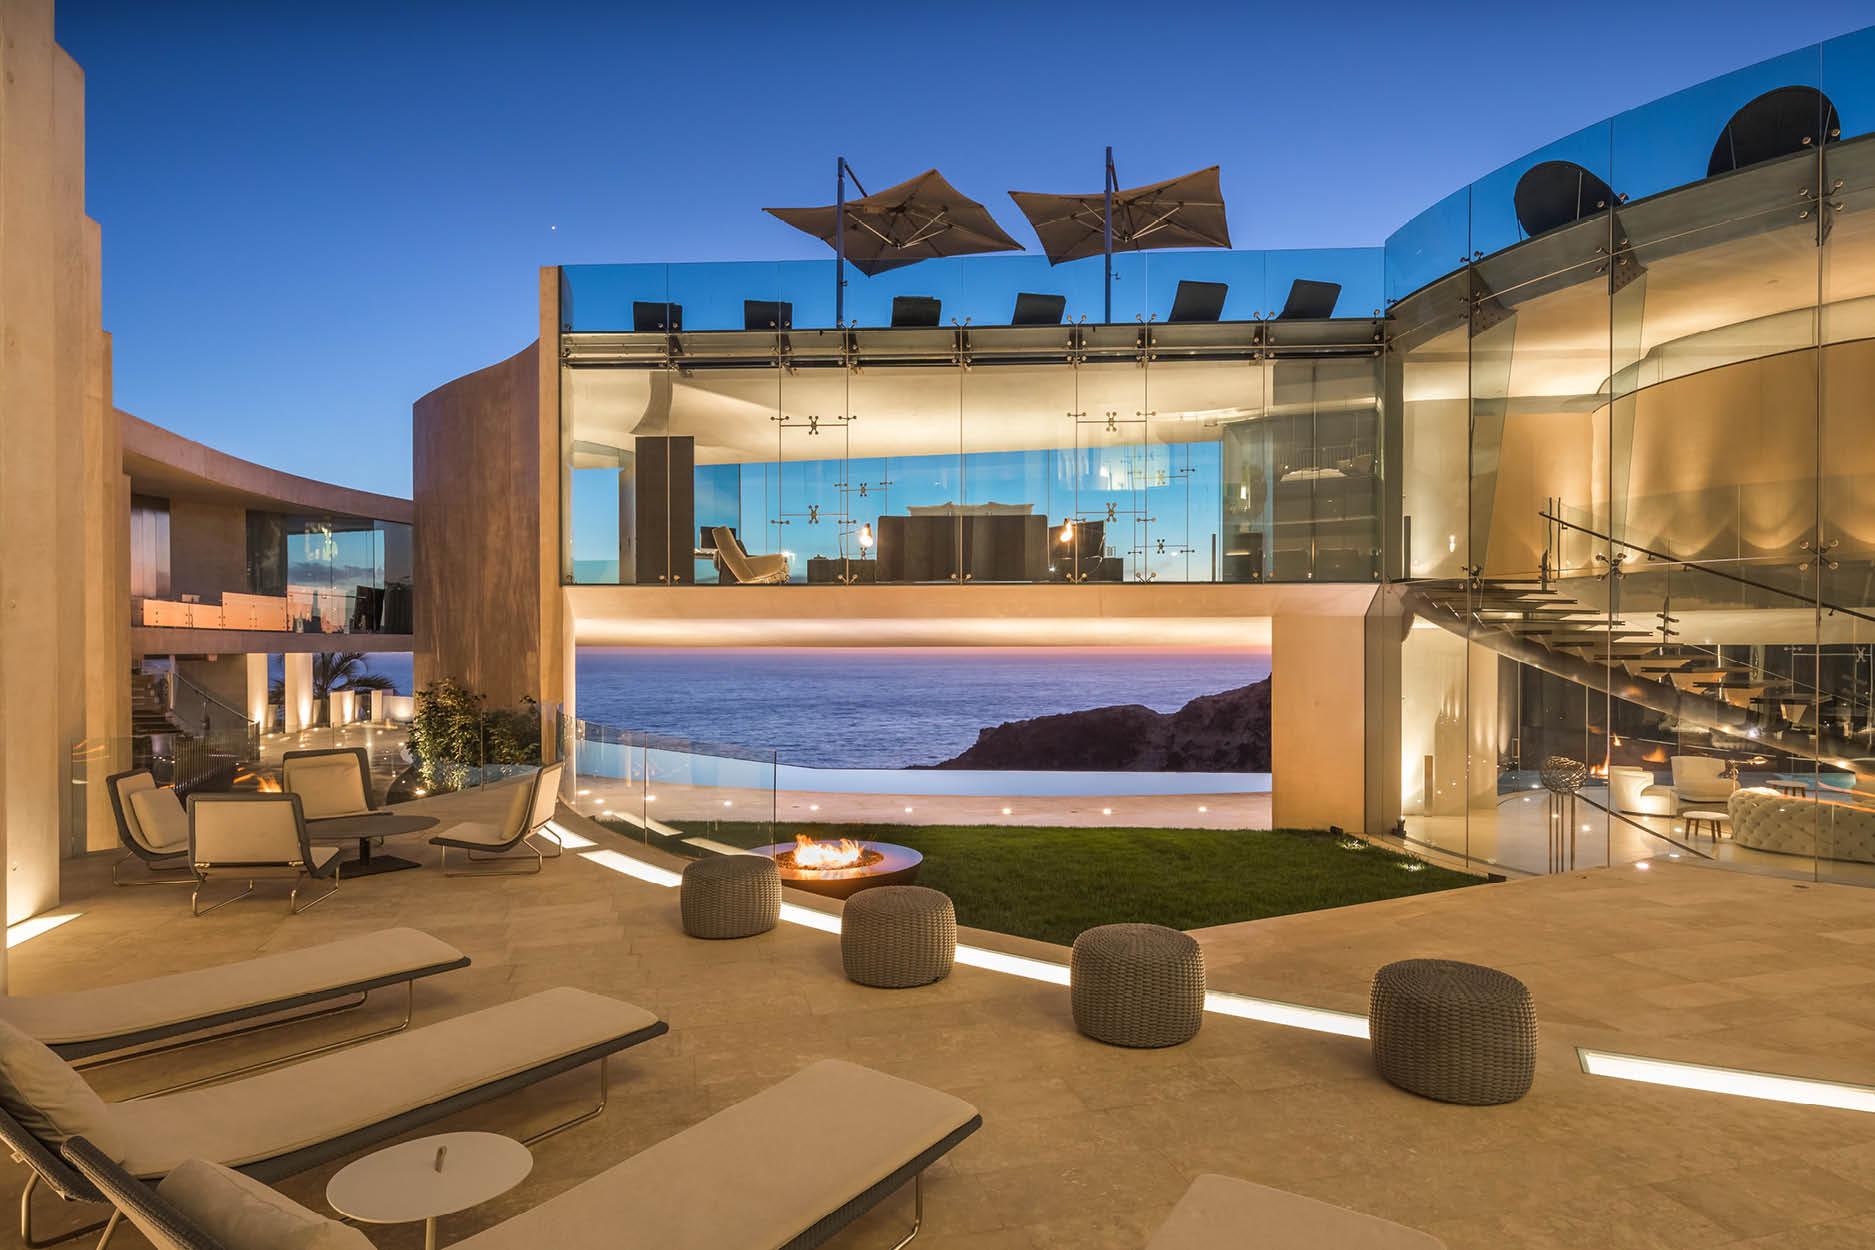 Step Inside Alicia Keys' Splendid Residence in California